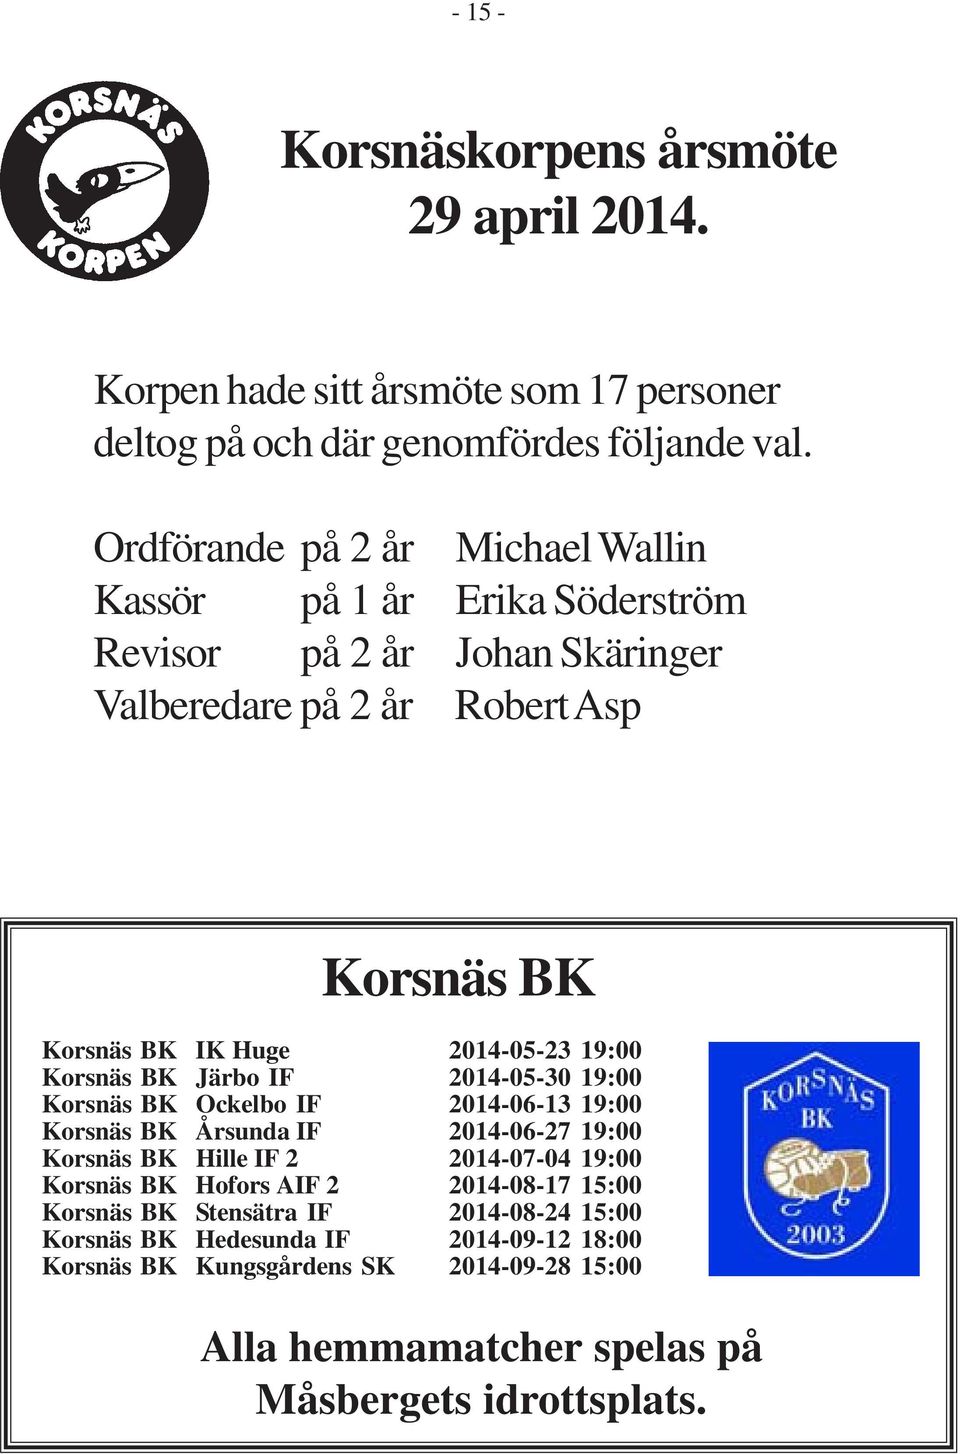 19:00 Korsnäs BK Järbo IF 2014-05-30 19:00 Korsnäs BK Ockelbo IF 2014-06-13 19:00 Korsnäs BK Årsunda IF 2014-06-27 19:00 Korsnäs BK Hille IF 2 2014-07-04 19:00 Korsnäs